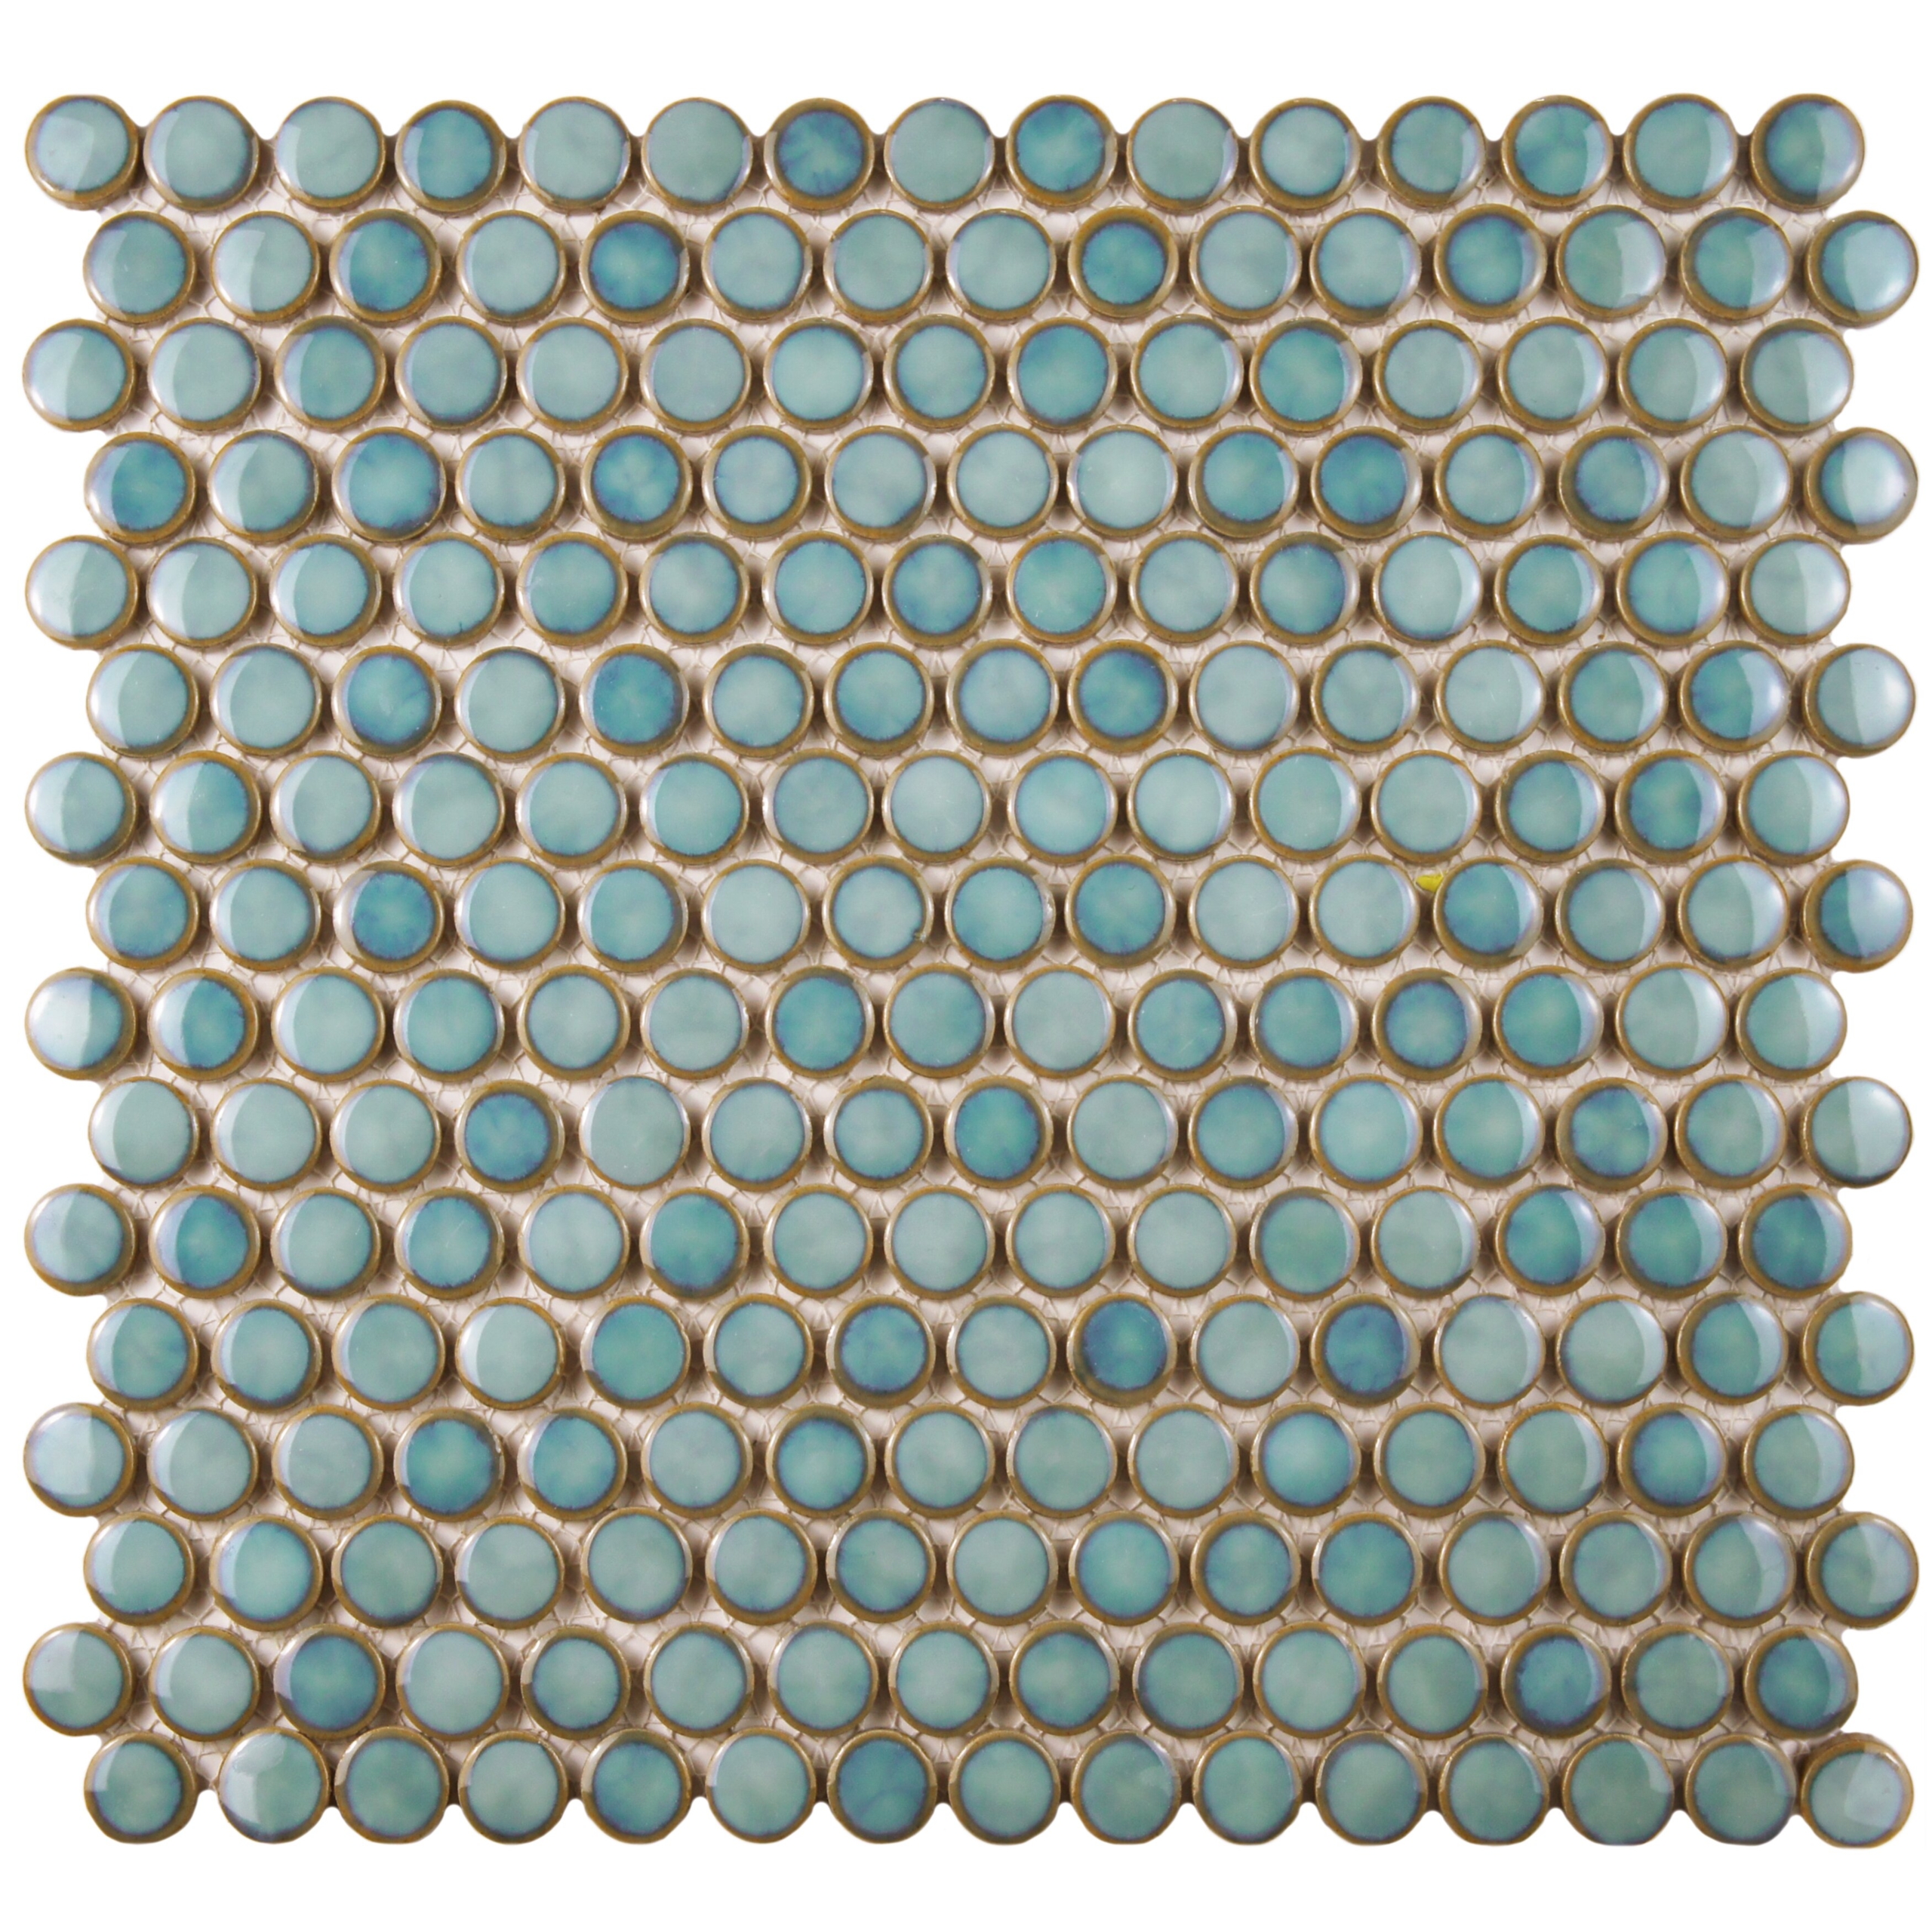 Penny 0.75" x 0.75" Porcelain Mosaic Tile in Marine